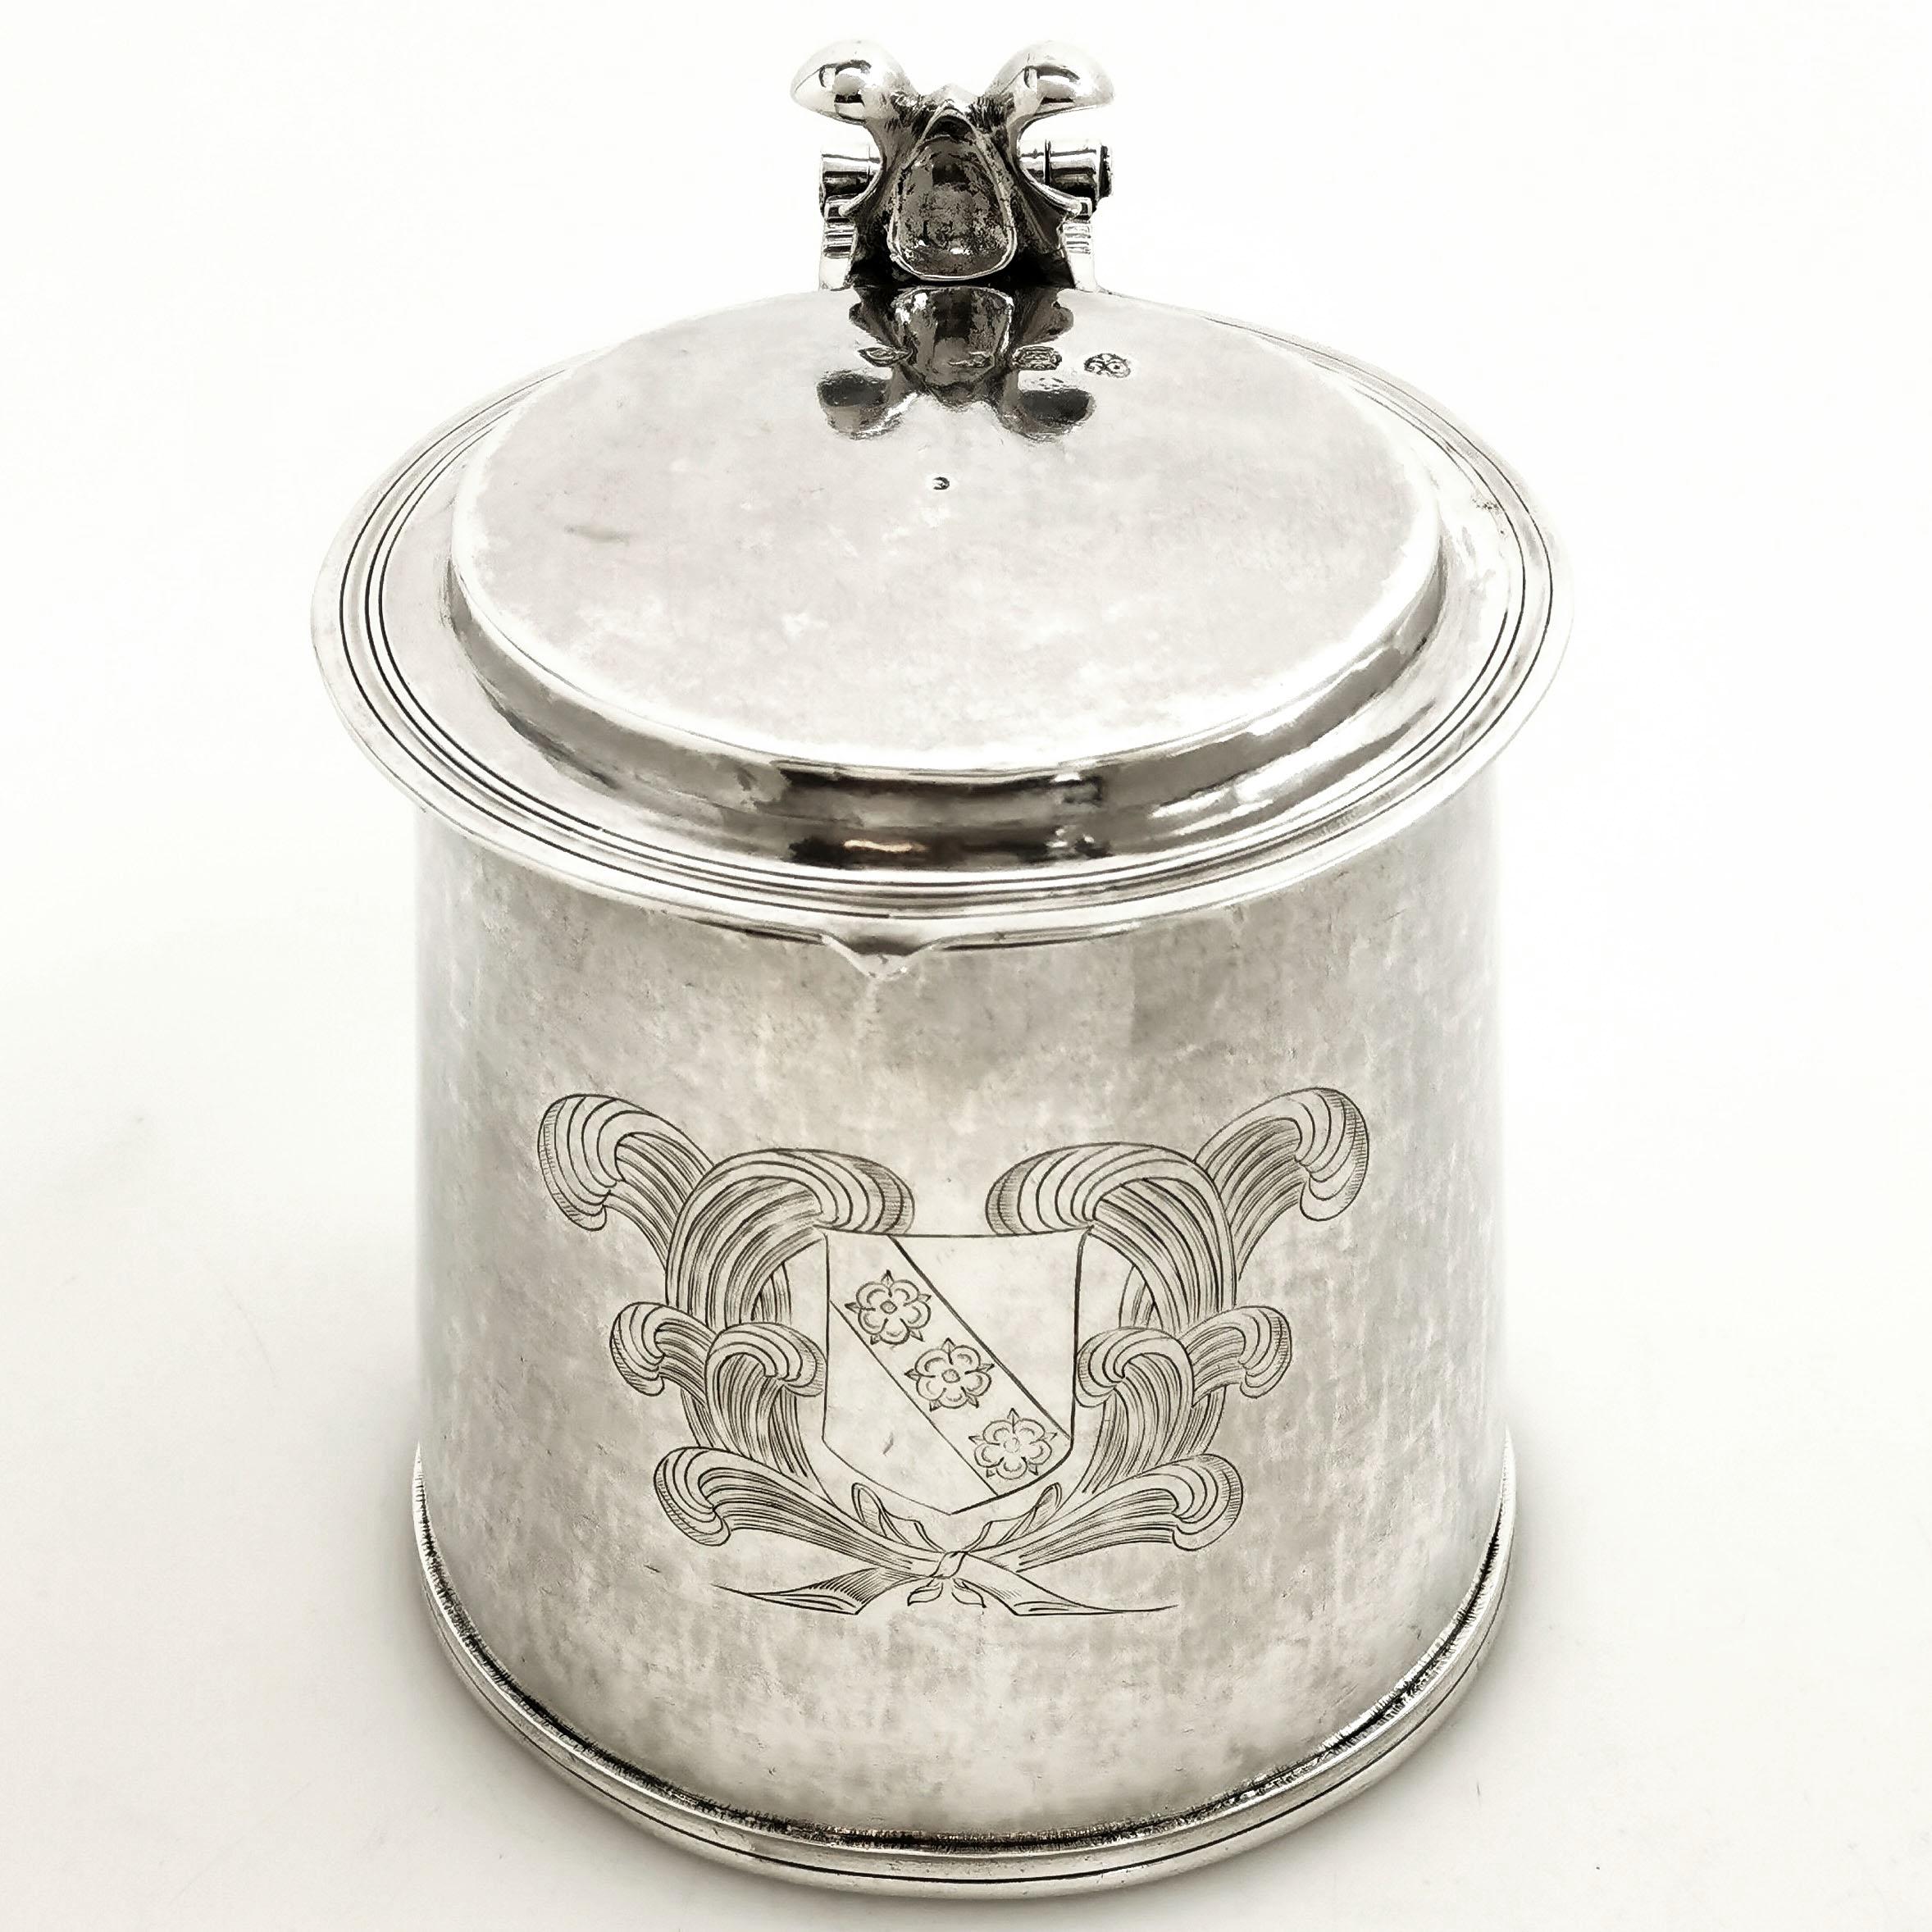 English Antique Silver Charles II Lidded Tankard Mug 1673 17th Century Beer Ale Tankard